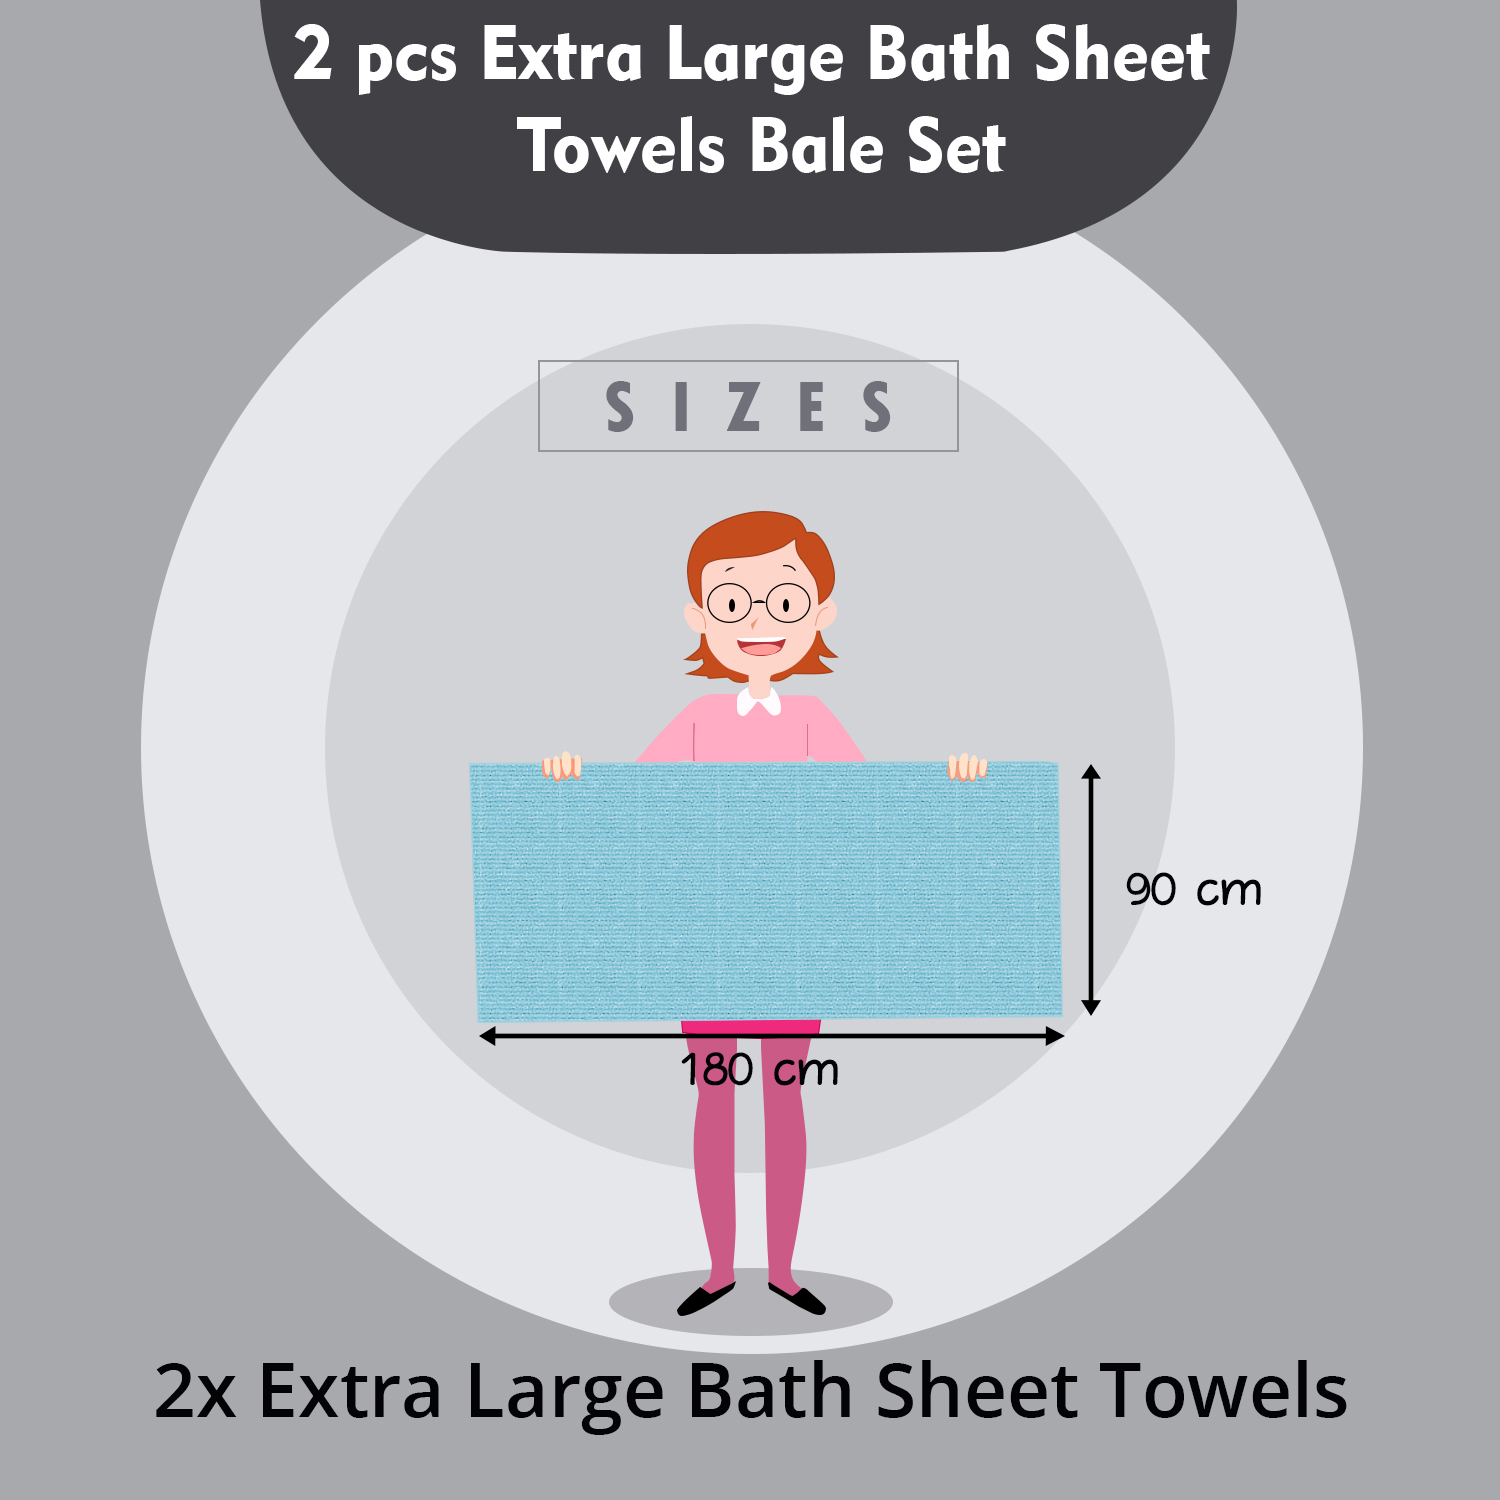 Bale Set 2pcs Cream Plain Extra Large Bath Sheet Towel